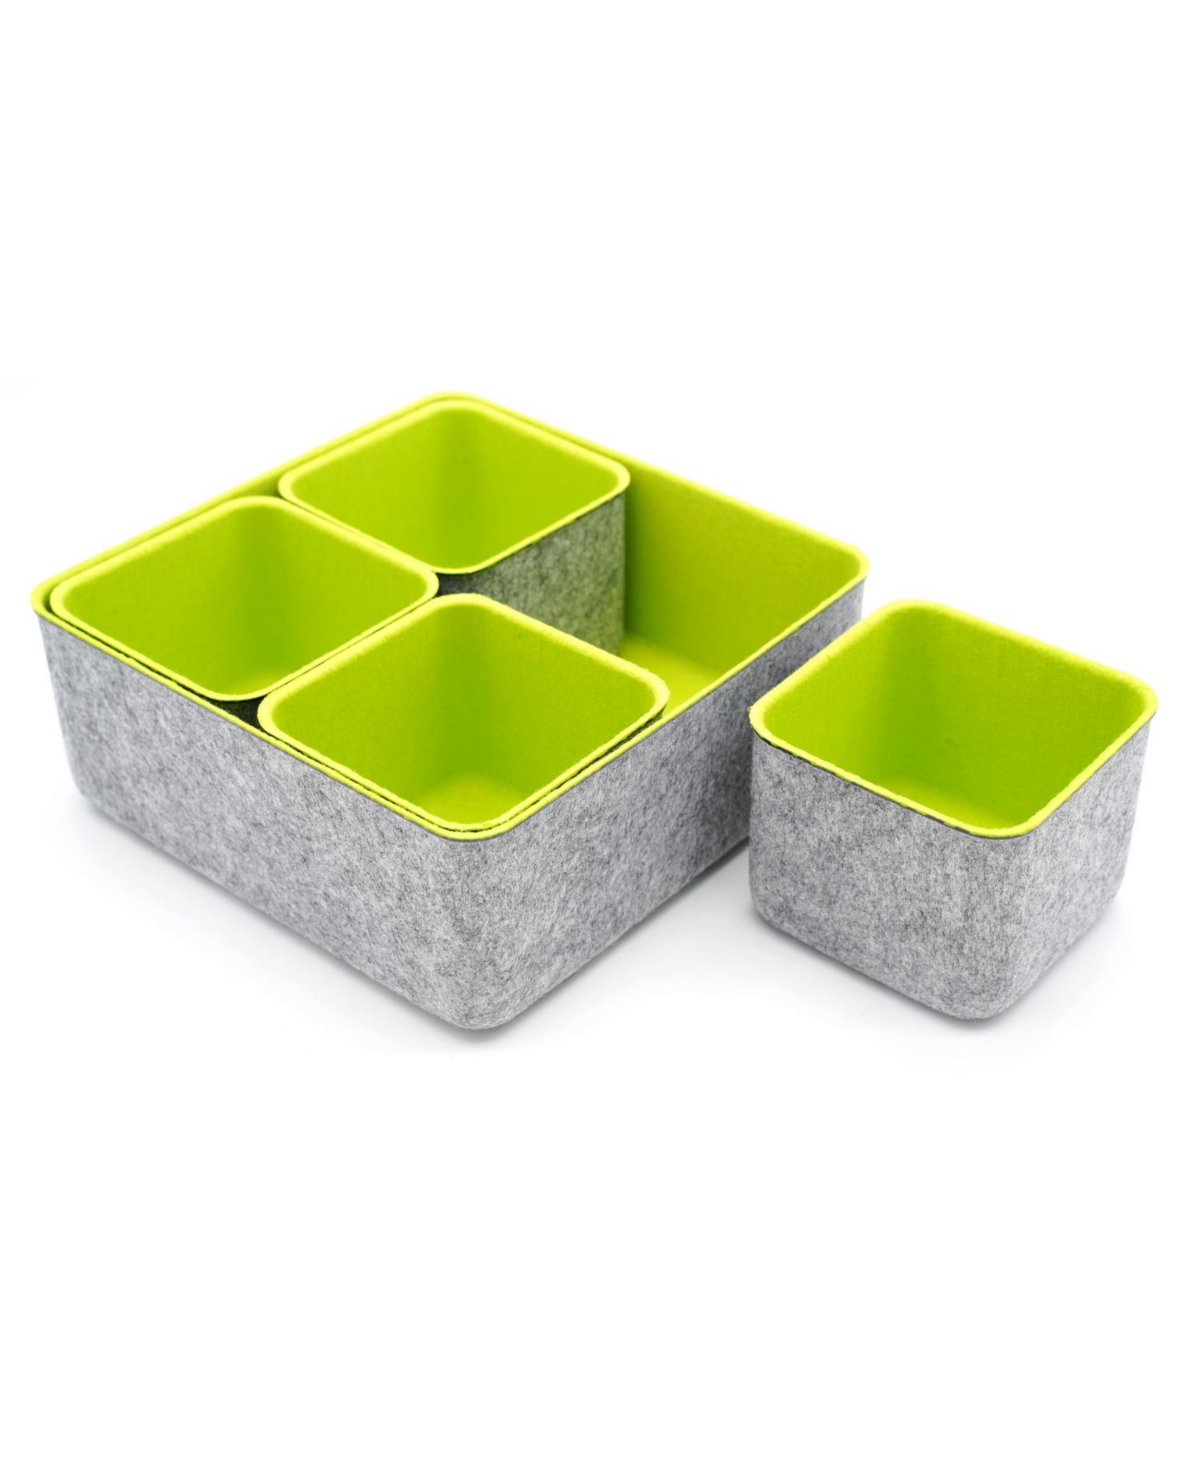 5 Piece Square Felt Storage Bin Set - Lime